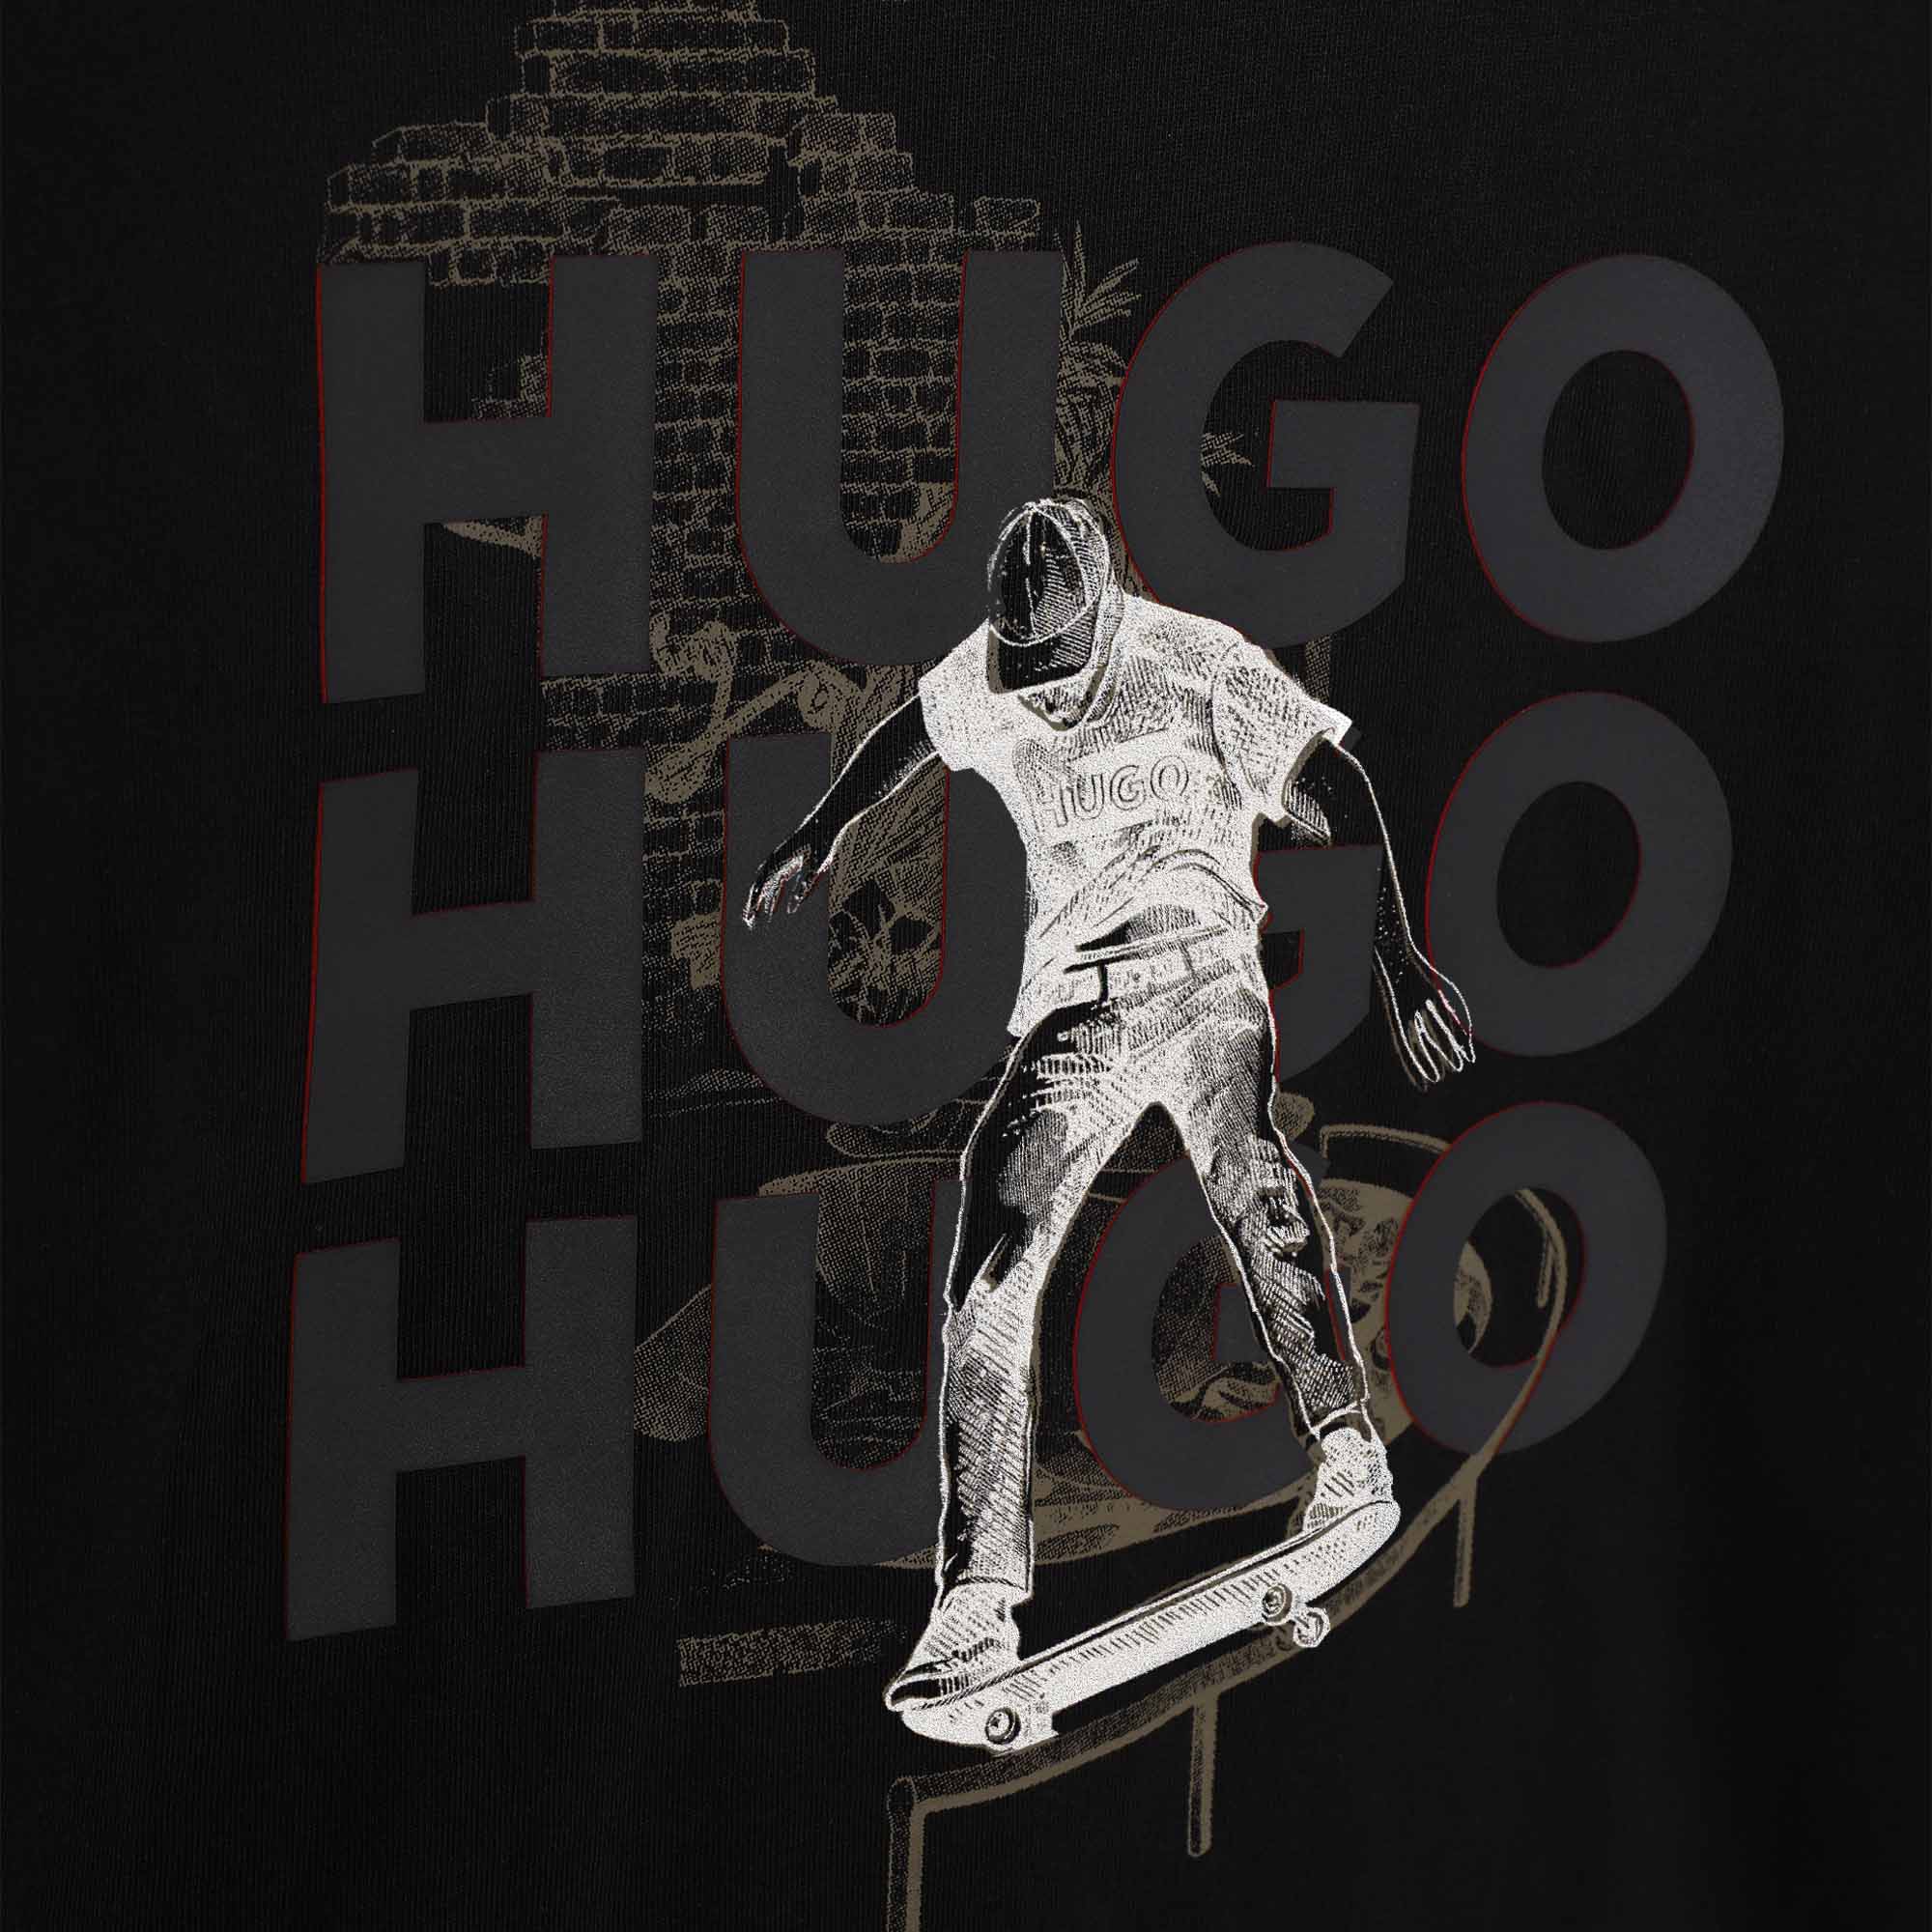 T-shirt with skateboard print HUGO for BOY